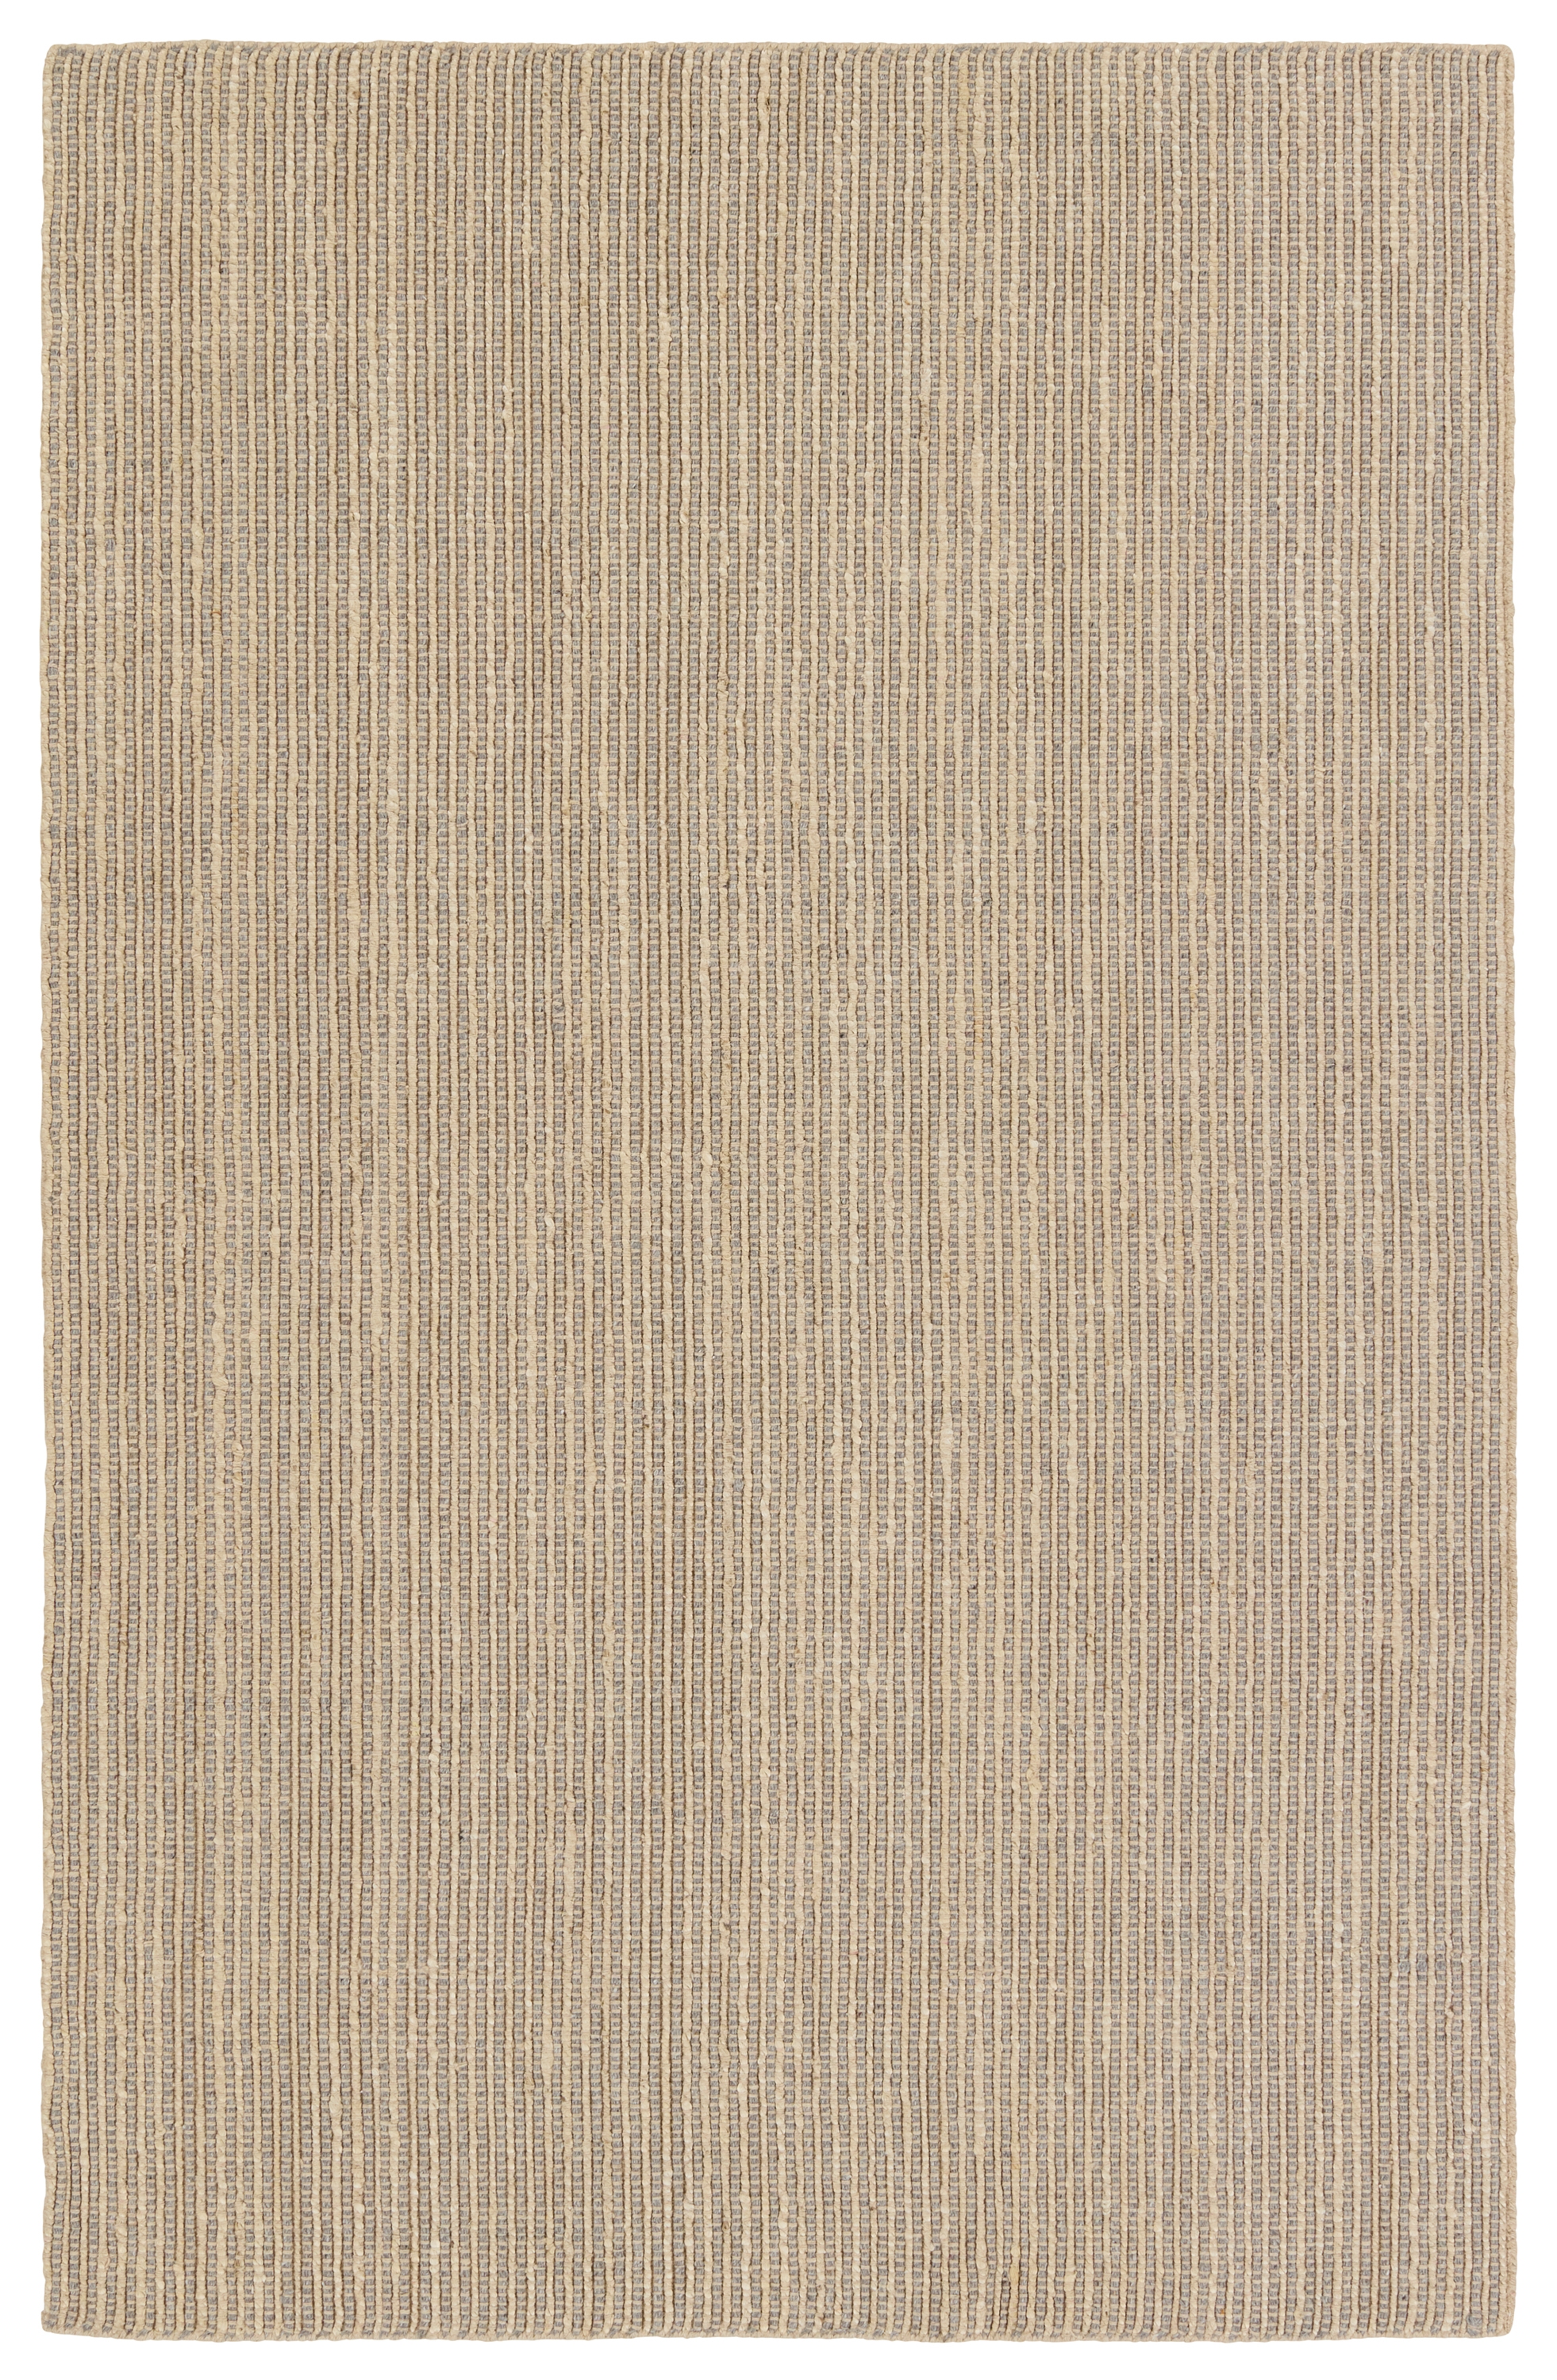 Latona Handmade Striped Gray/ Tan Area Rug (8'X10') - Image 0